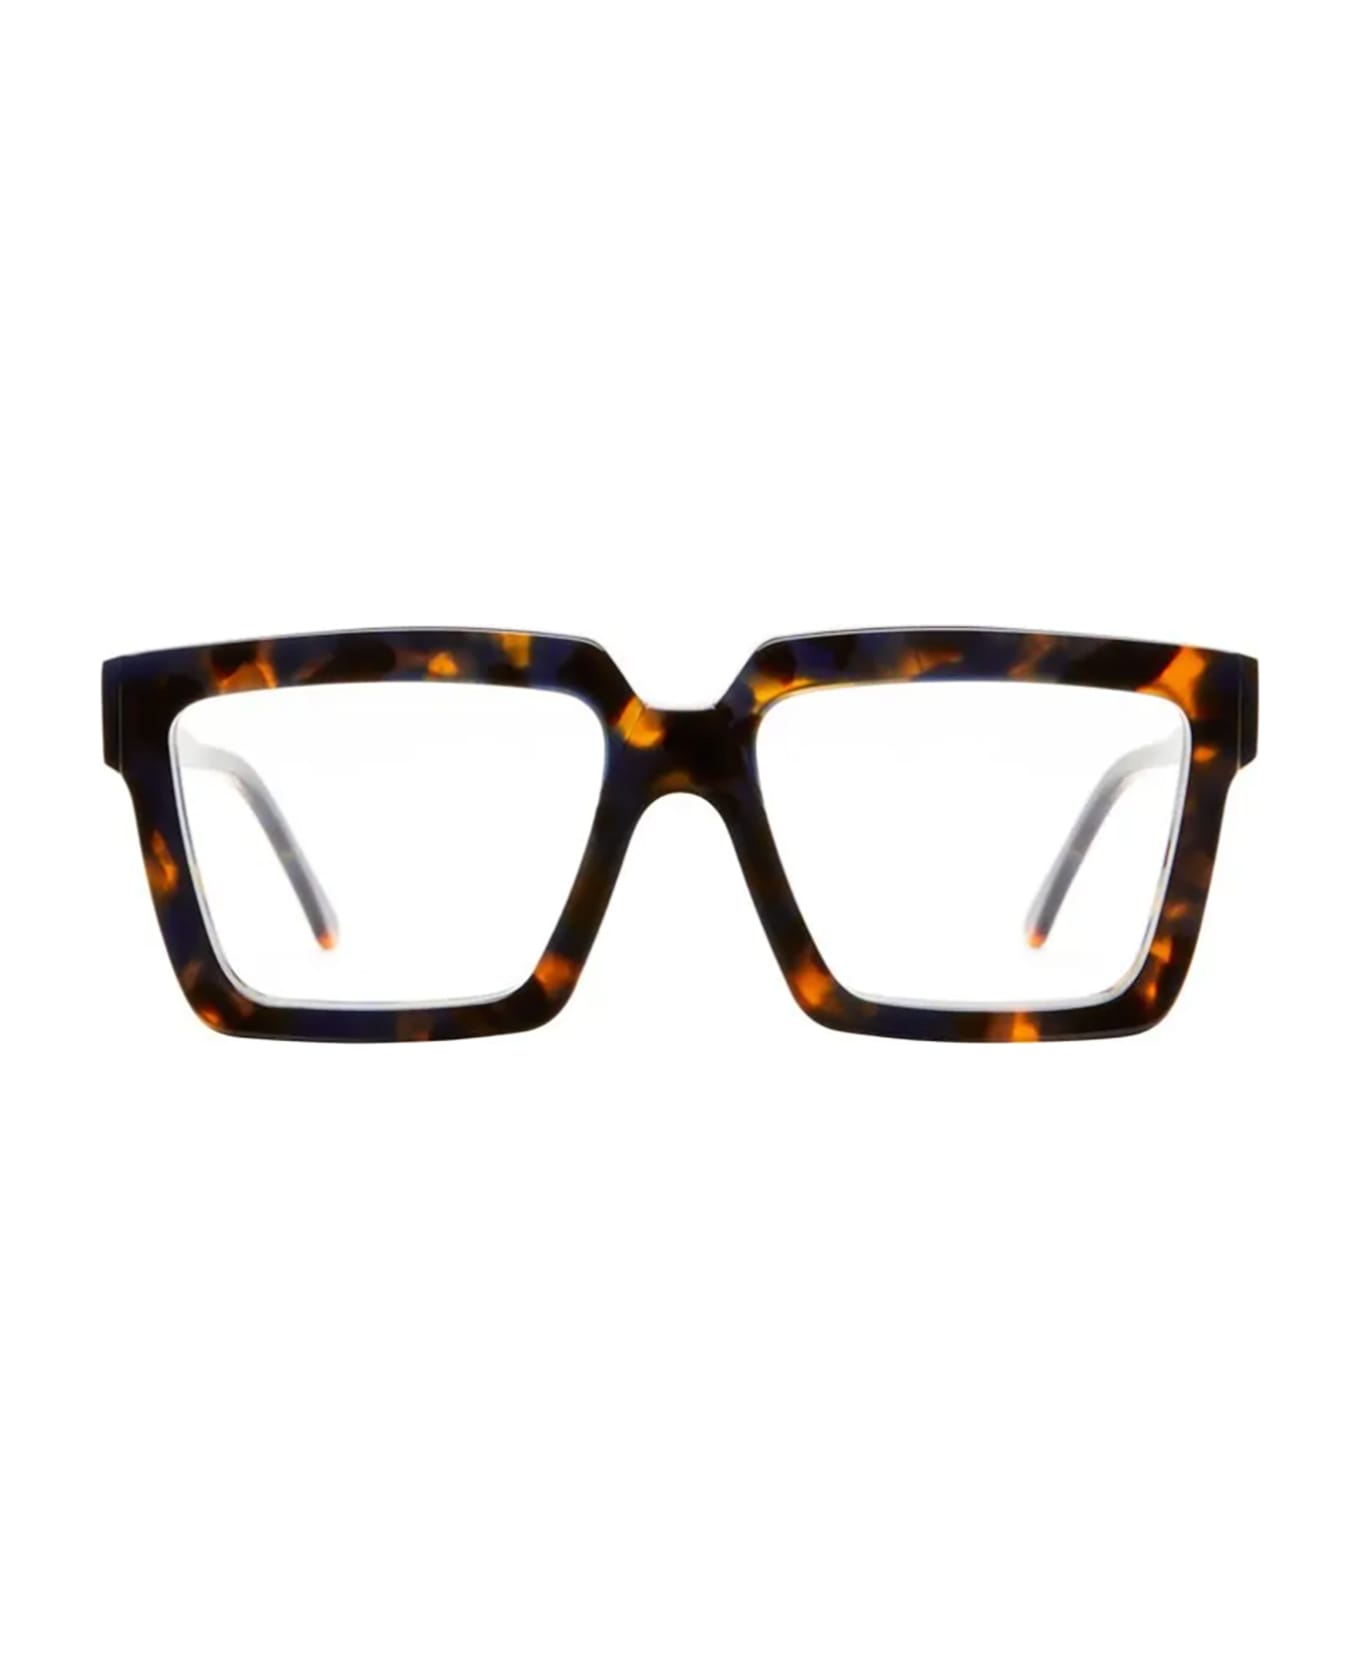 Kuboraum K26 Eyewear - Hb